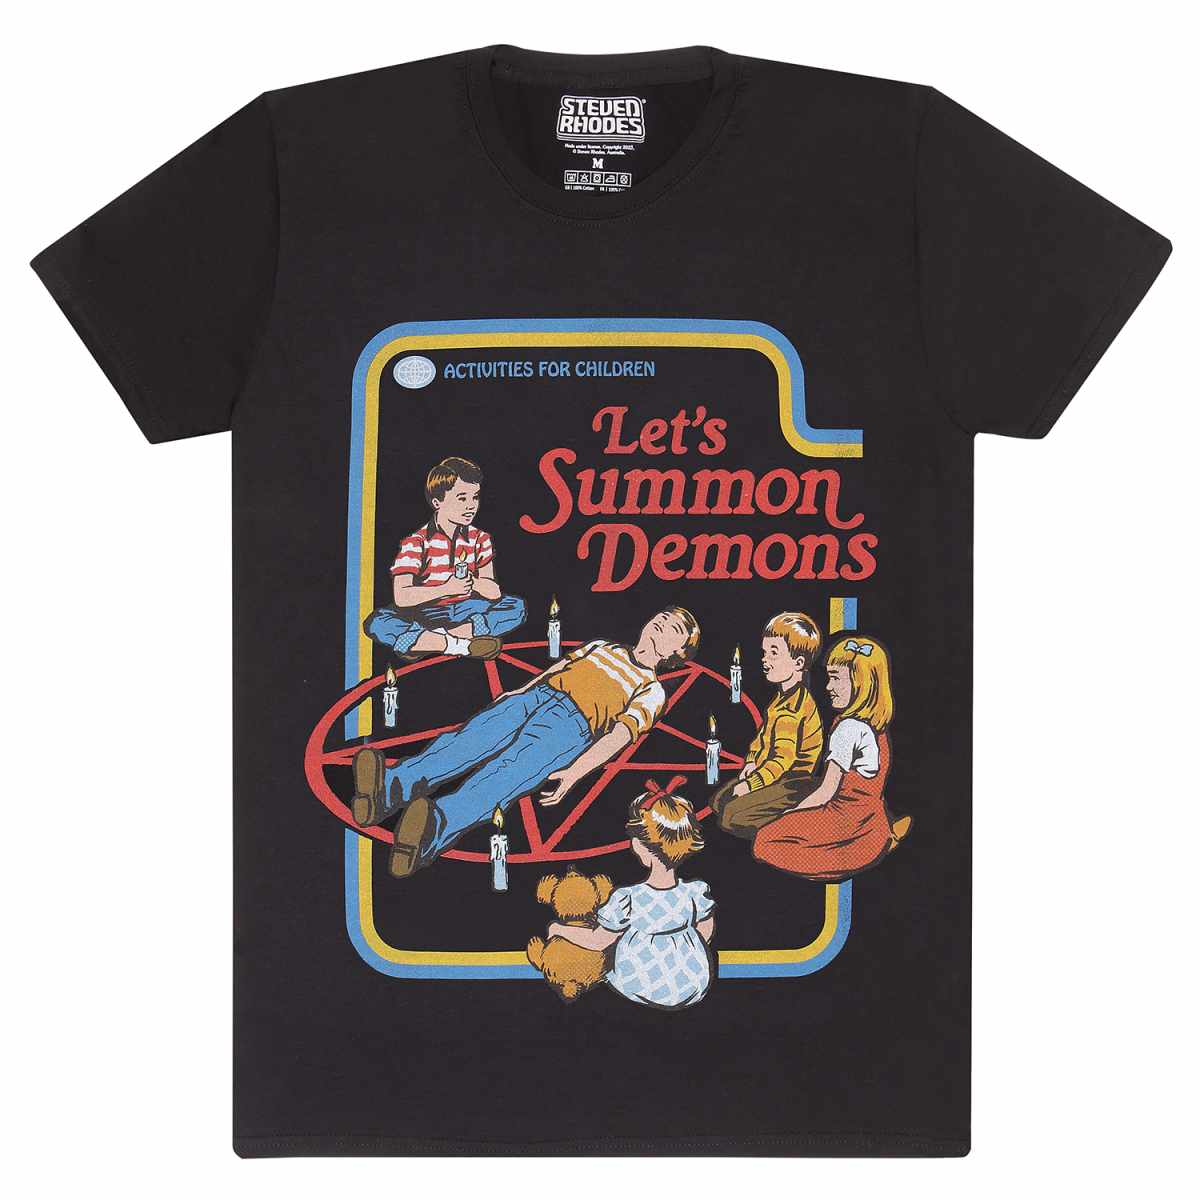 Steven Rhodes T-Shirt | Lets Summon Demons